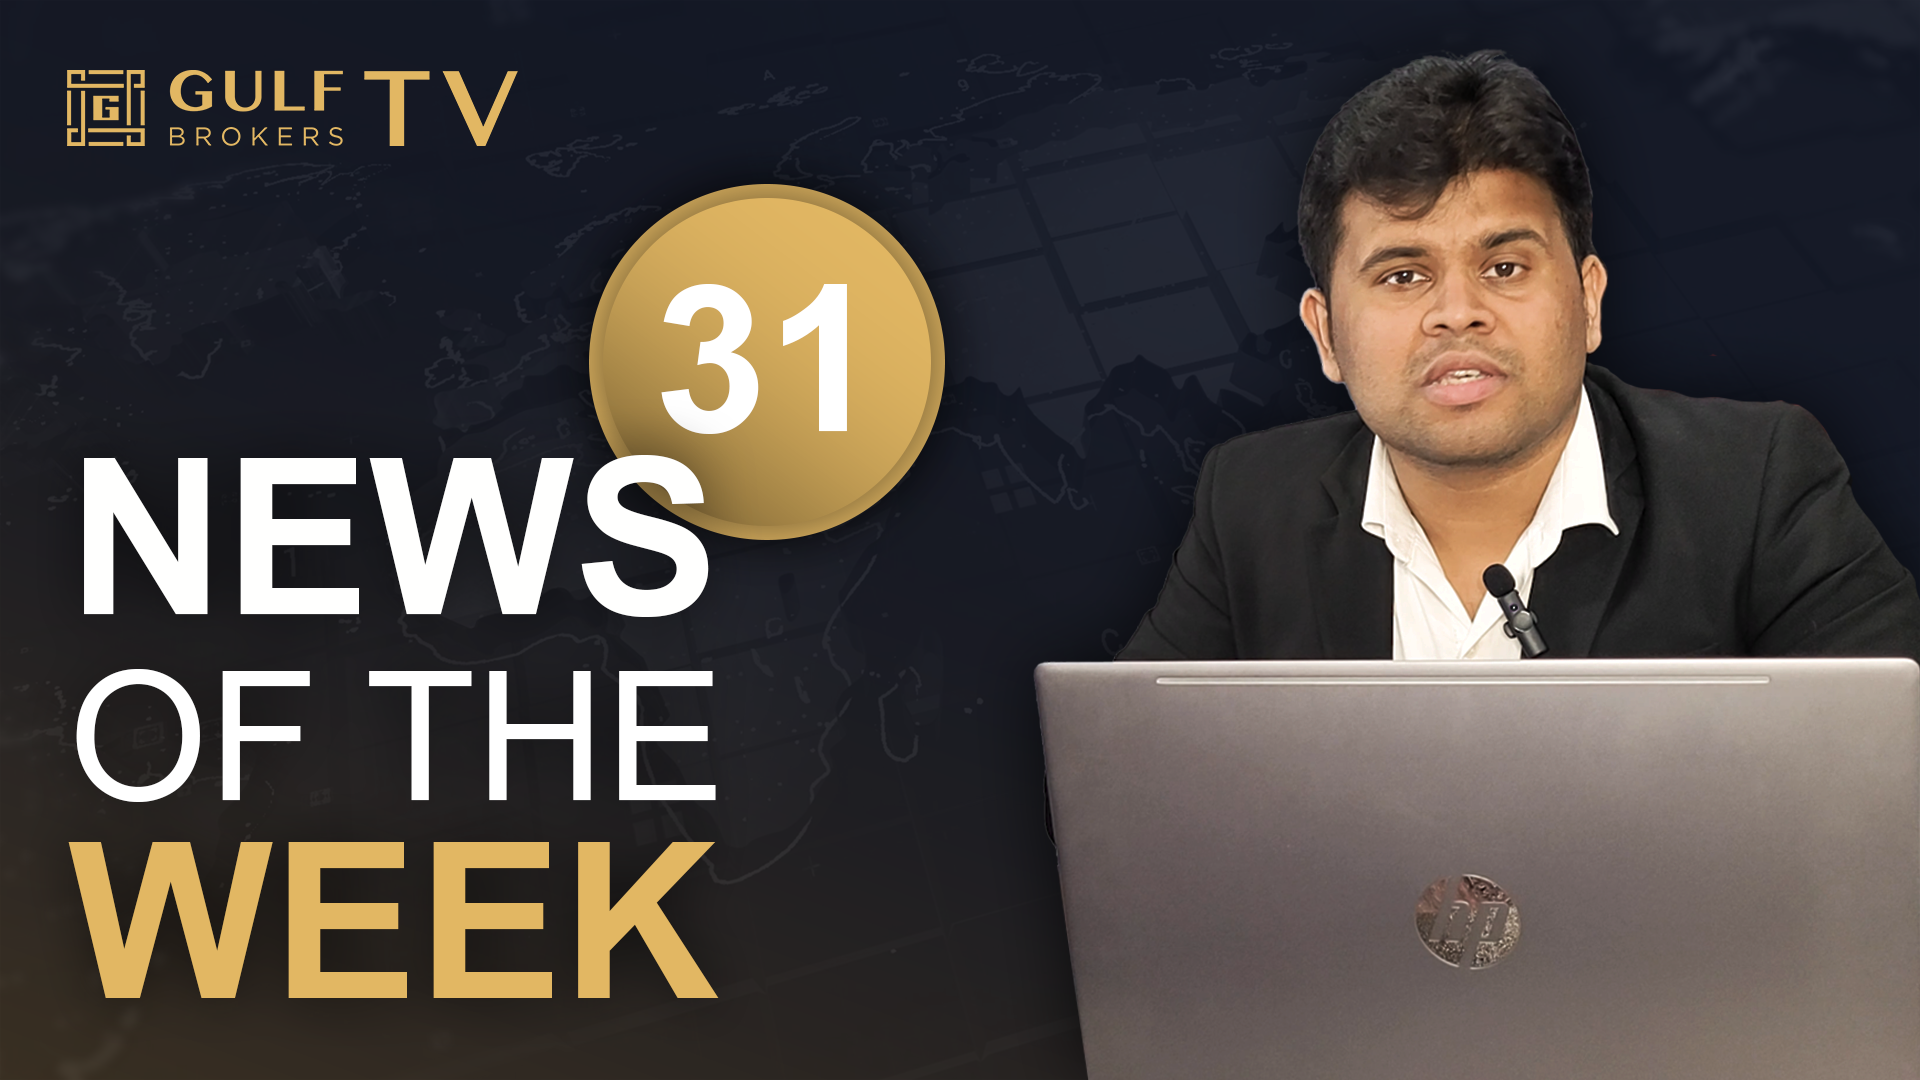 Gulfbrokers | Gulf Brokers | News of the week 31 | Syam KP